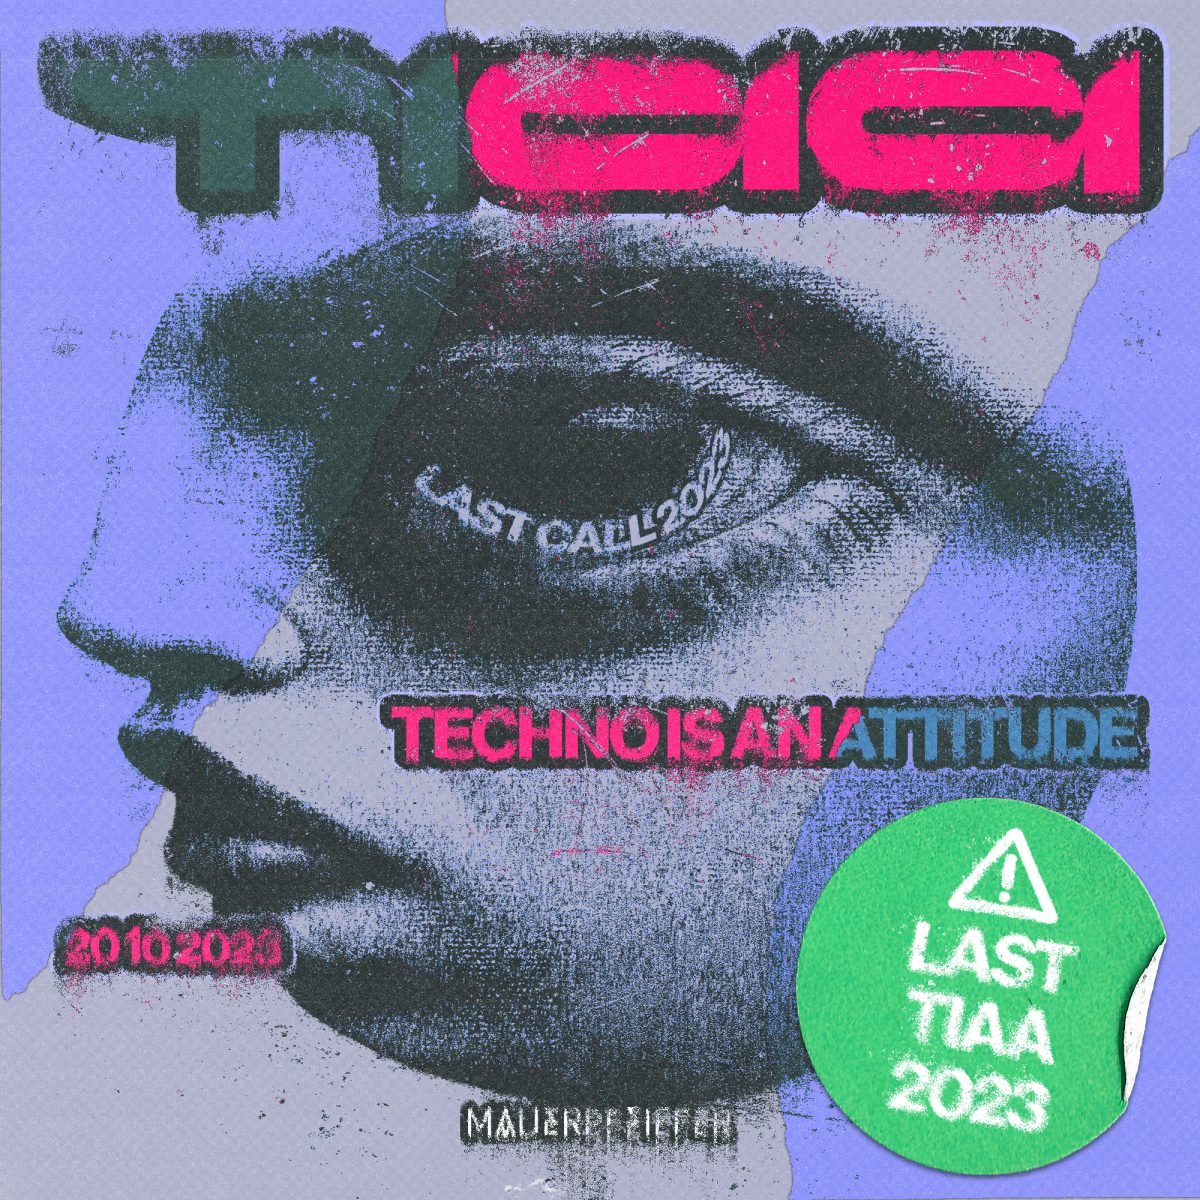 Techno is an Attititude pres. the last Call – freie DJ-Slots